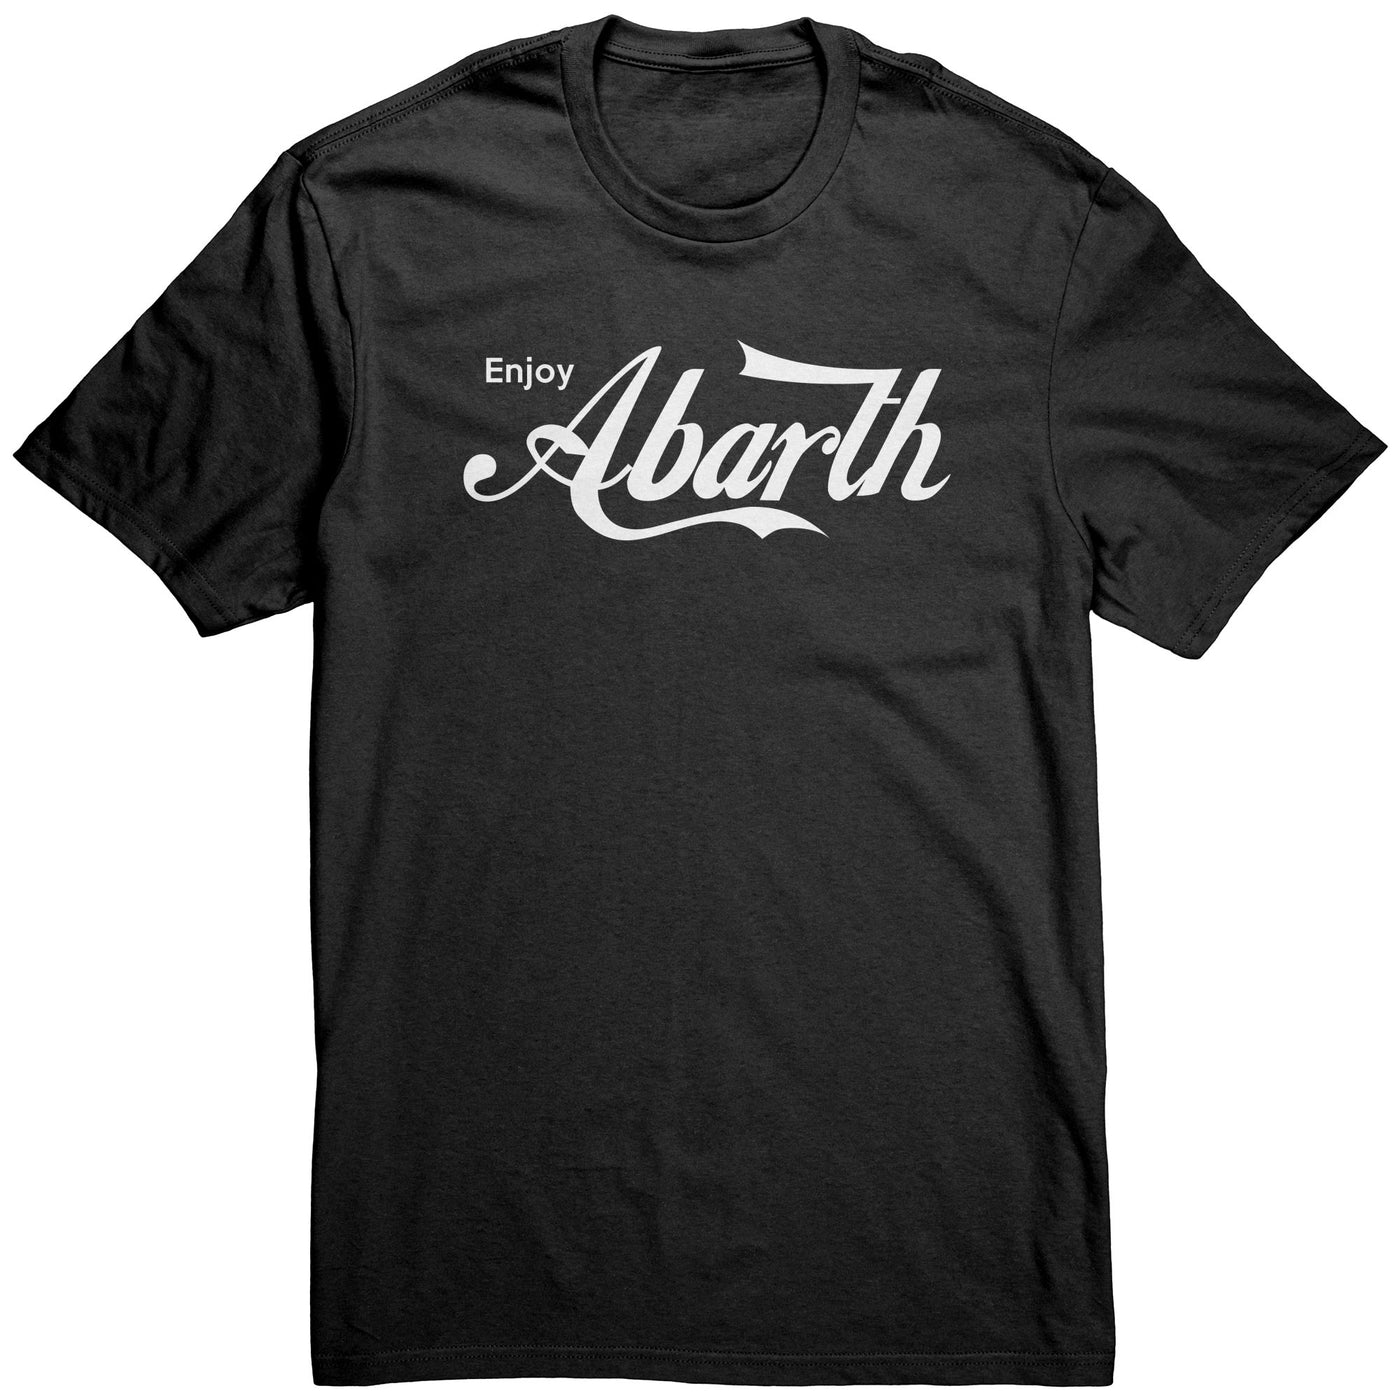 enjoy-abarth-shirt-black